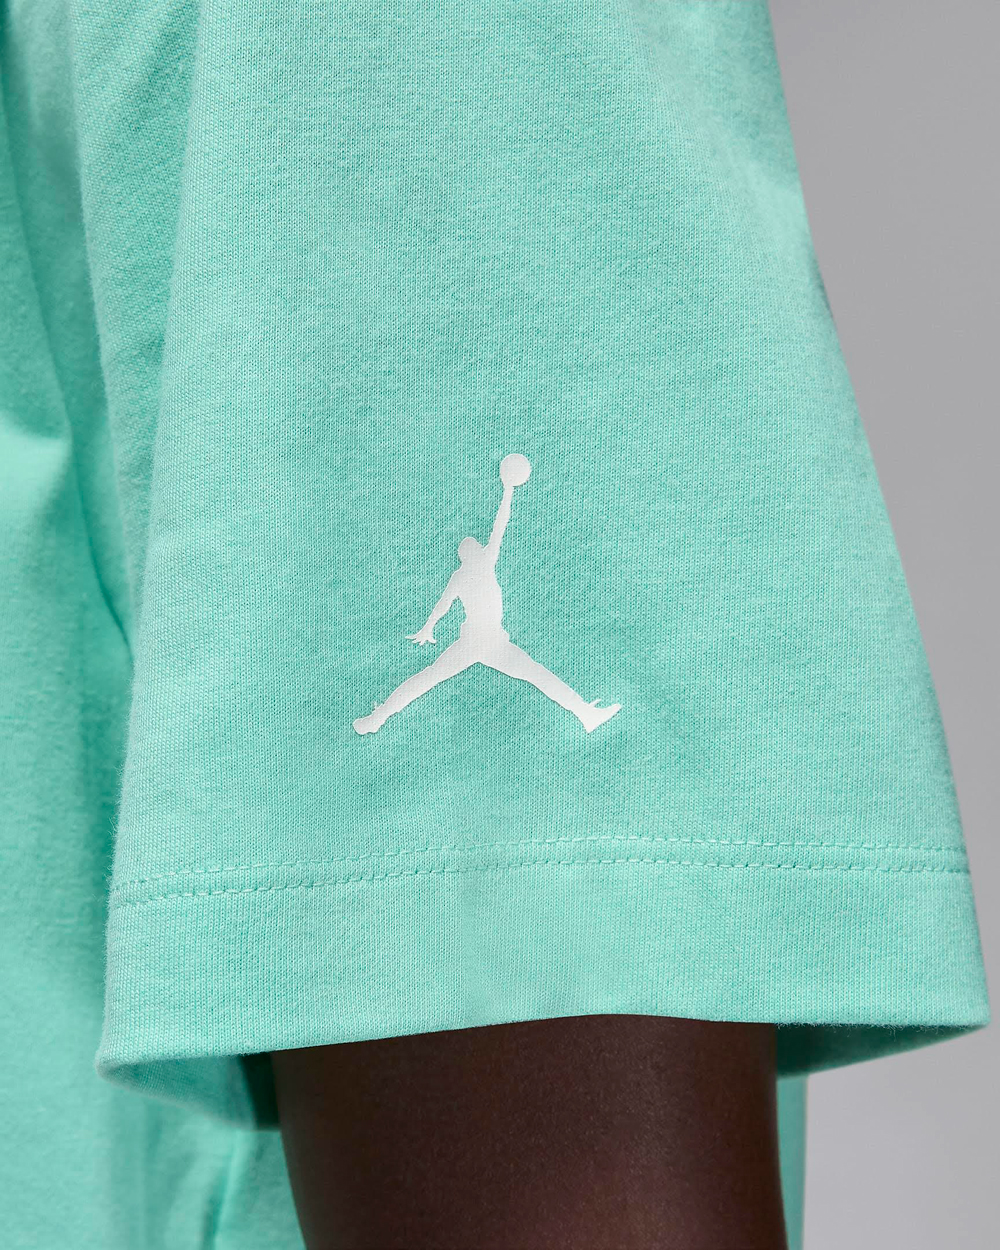 Air Jordan 1 High Green Glow Matching Shirt Outfit